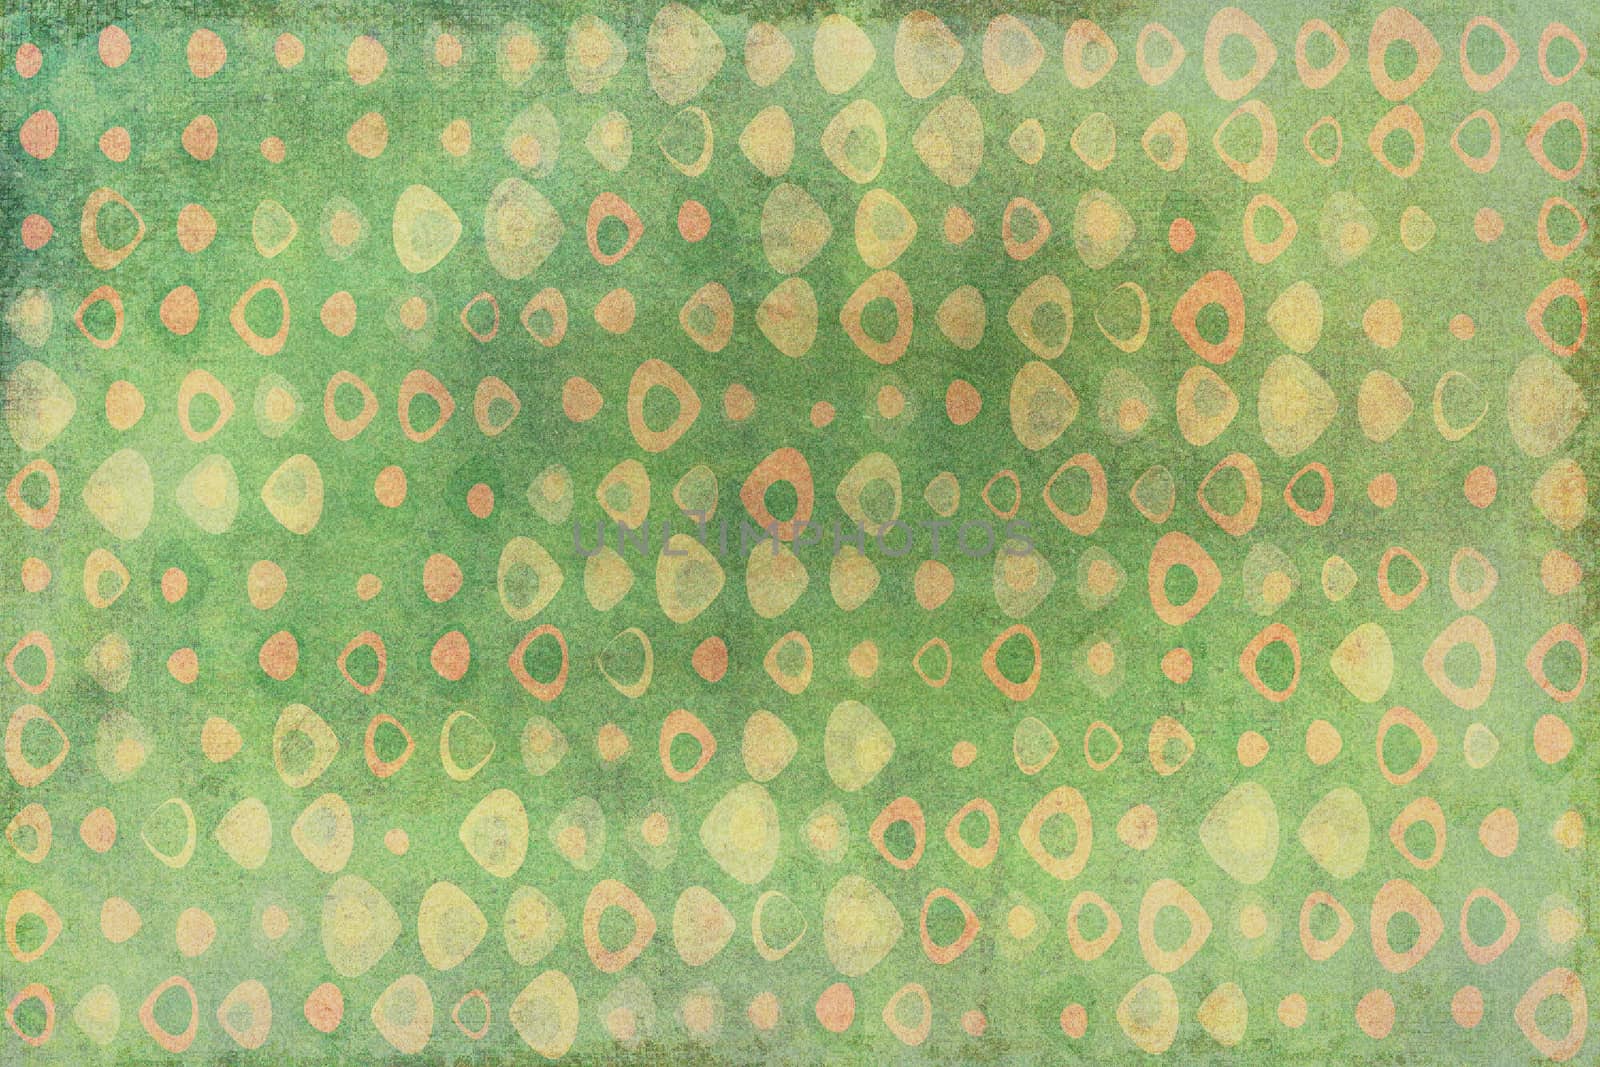 Green Triangles Texture by MaxalTamor